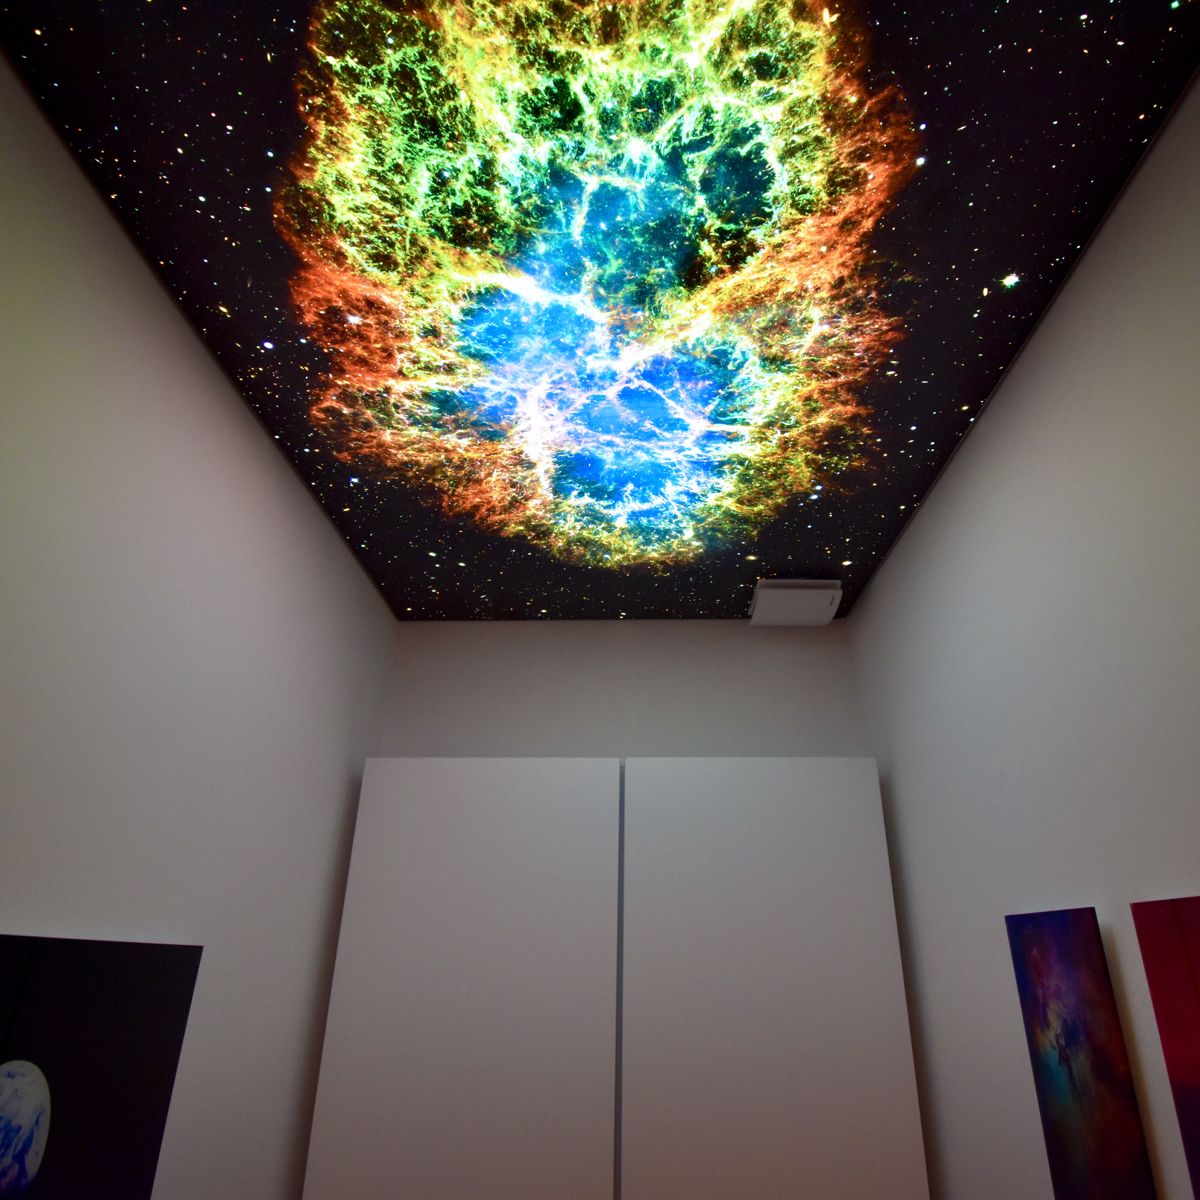 Celestial Ceilings: Bringing The Galaxy Indoors